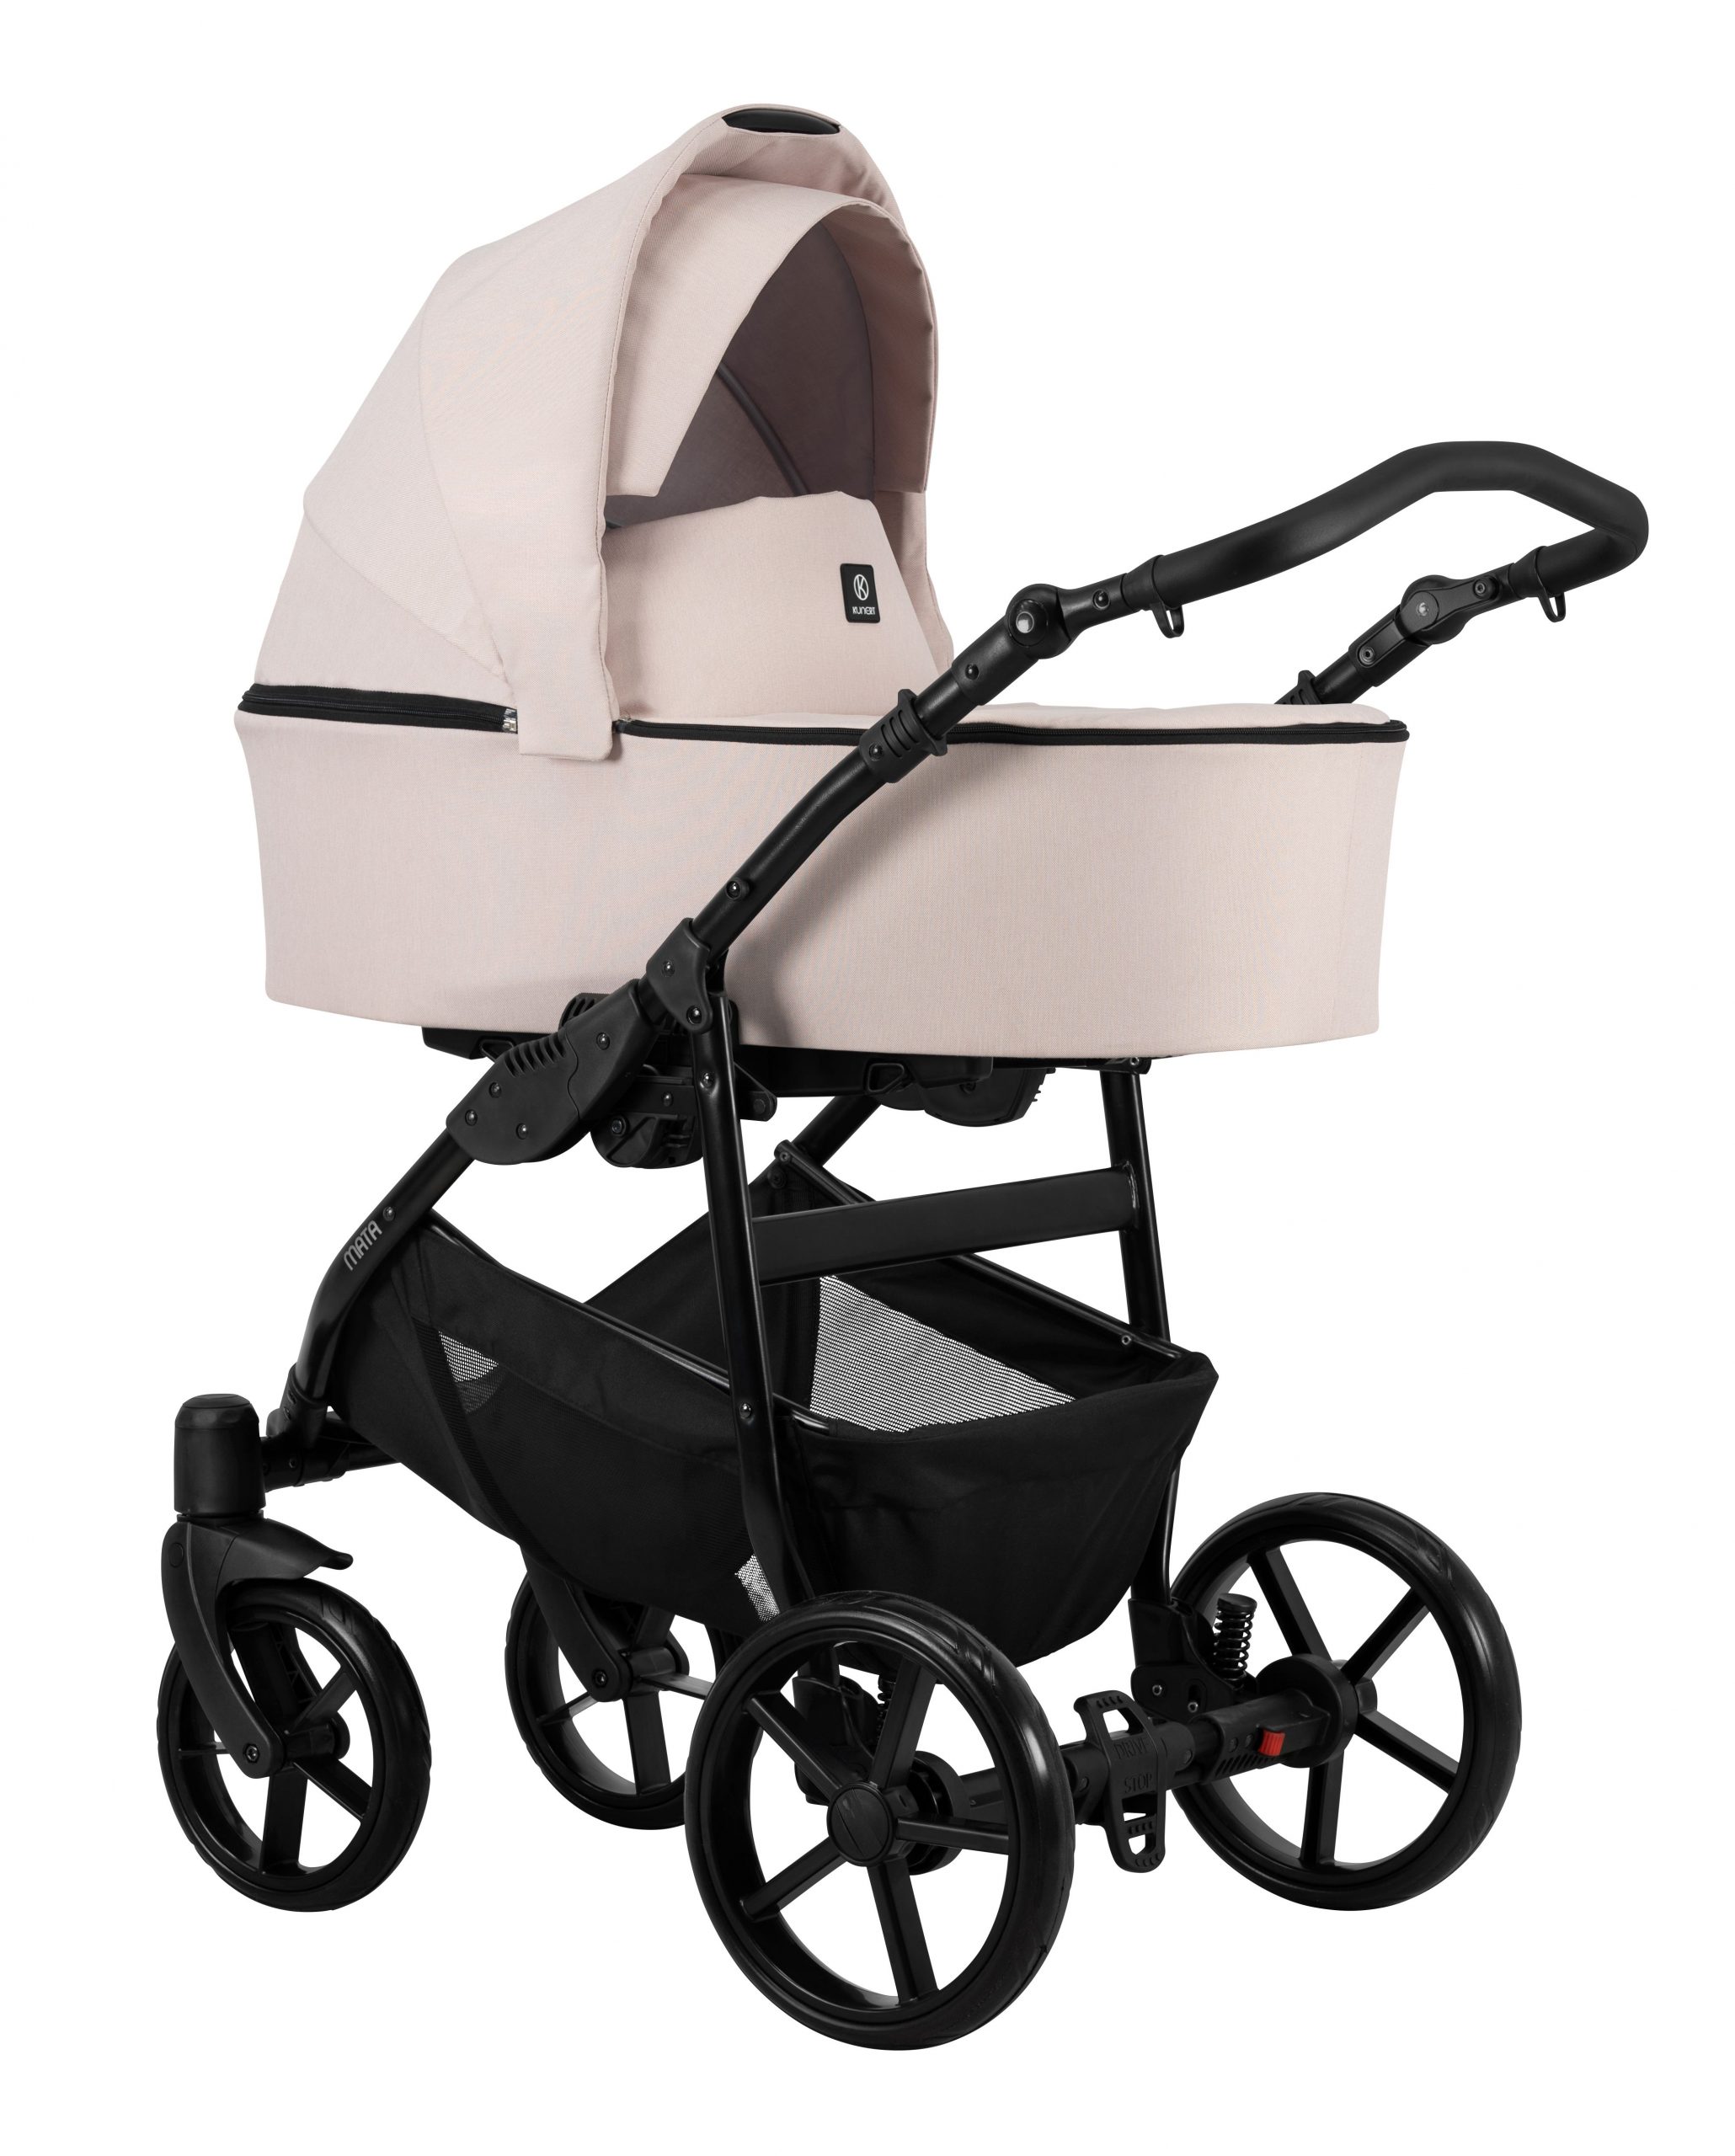 Carro de bebé MATA chasis Negro – Kunert - Carros de bebé y Mobiliario  infantil